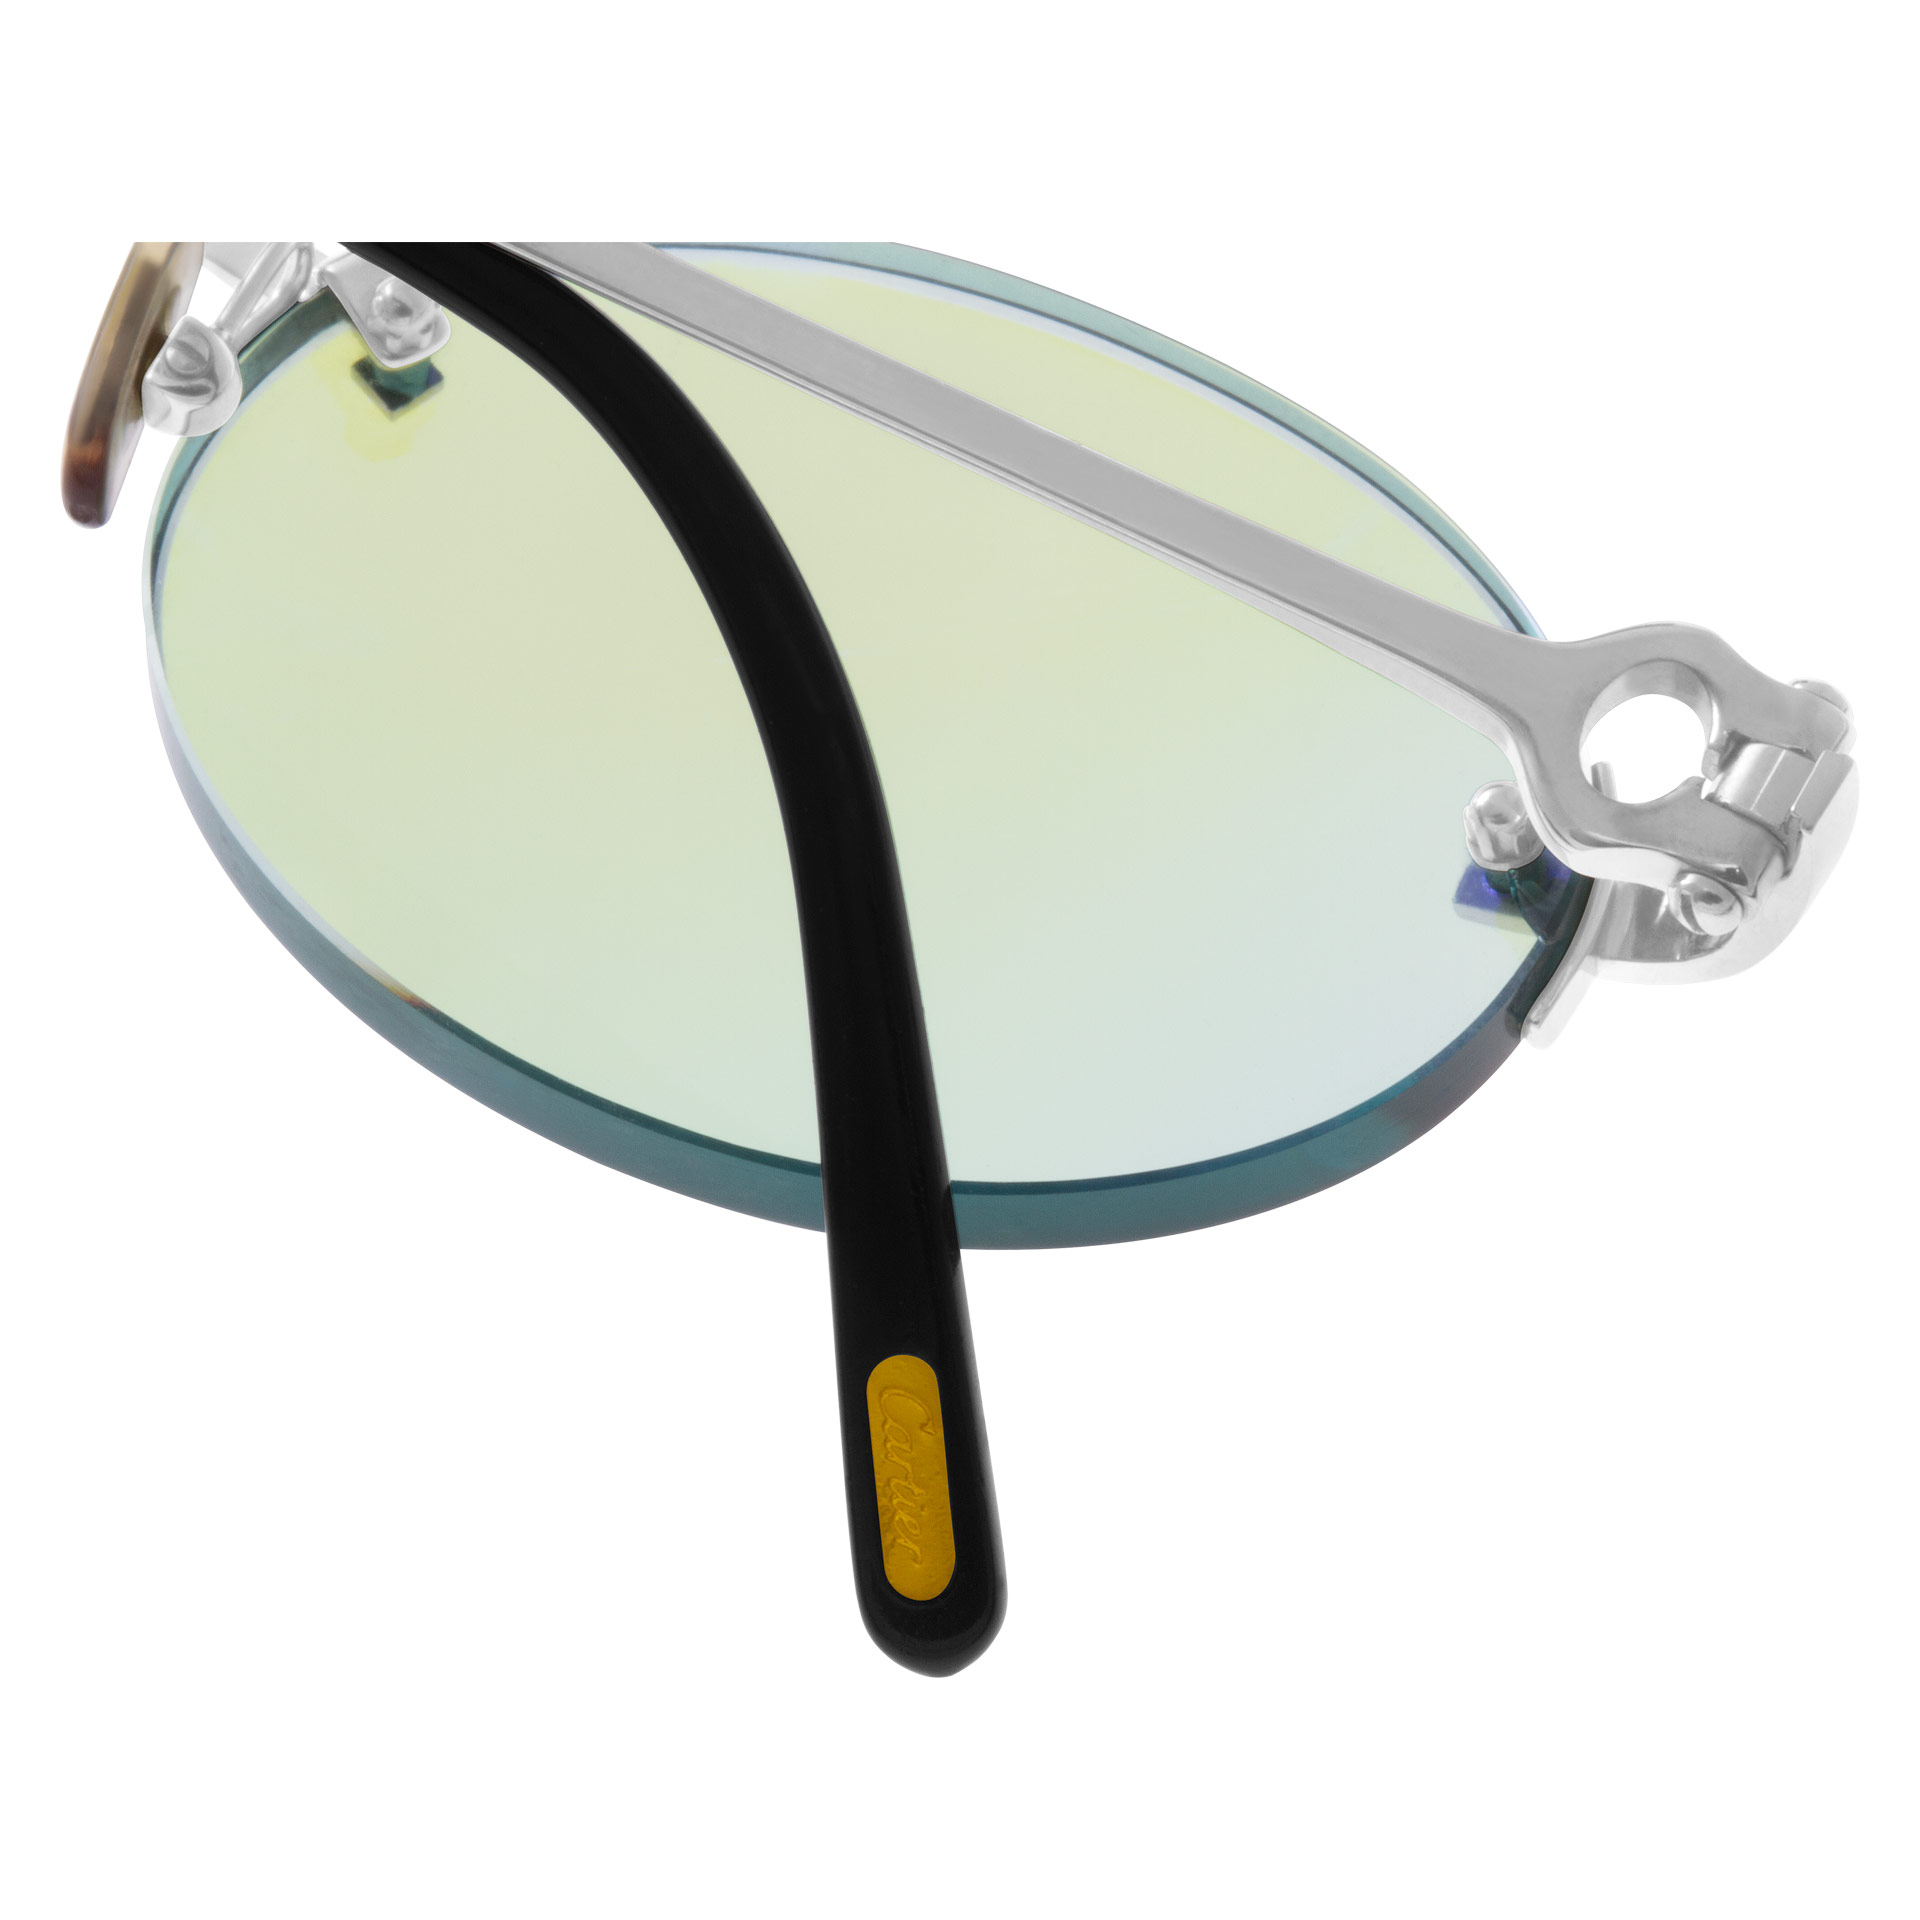 Cartier sunglasses steel frames image 3